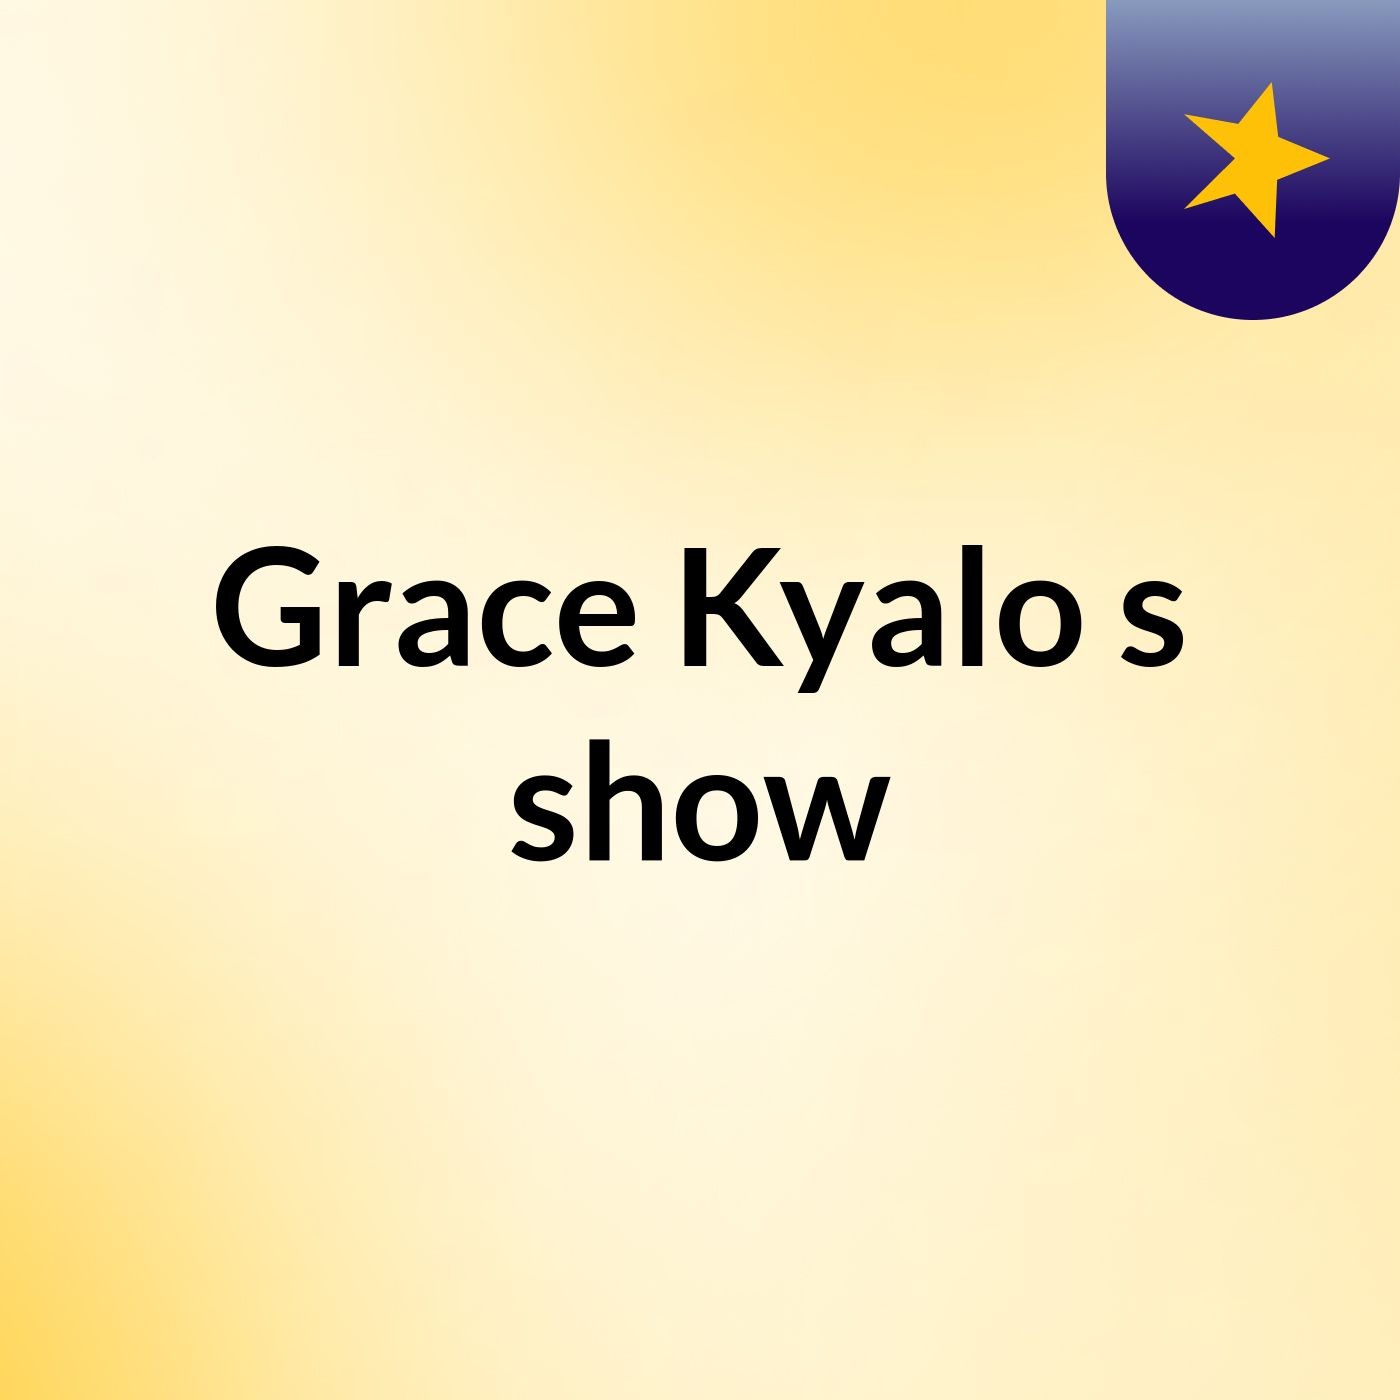 Grace Kyalo's show